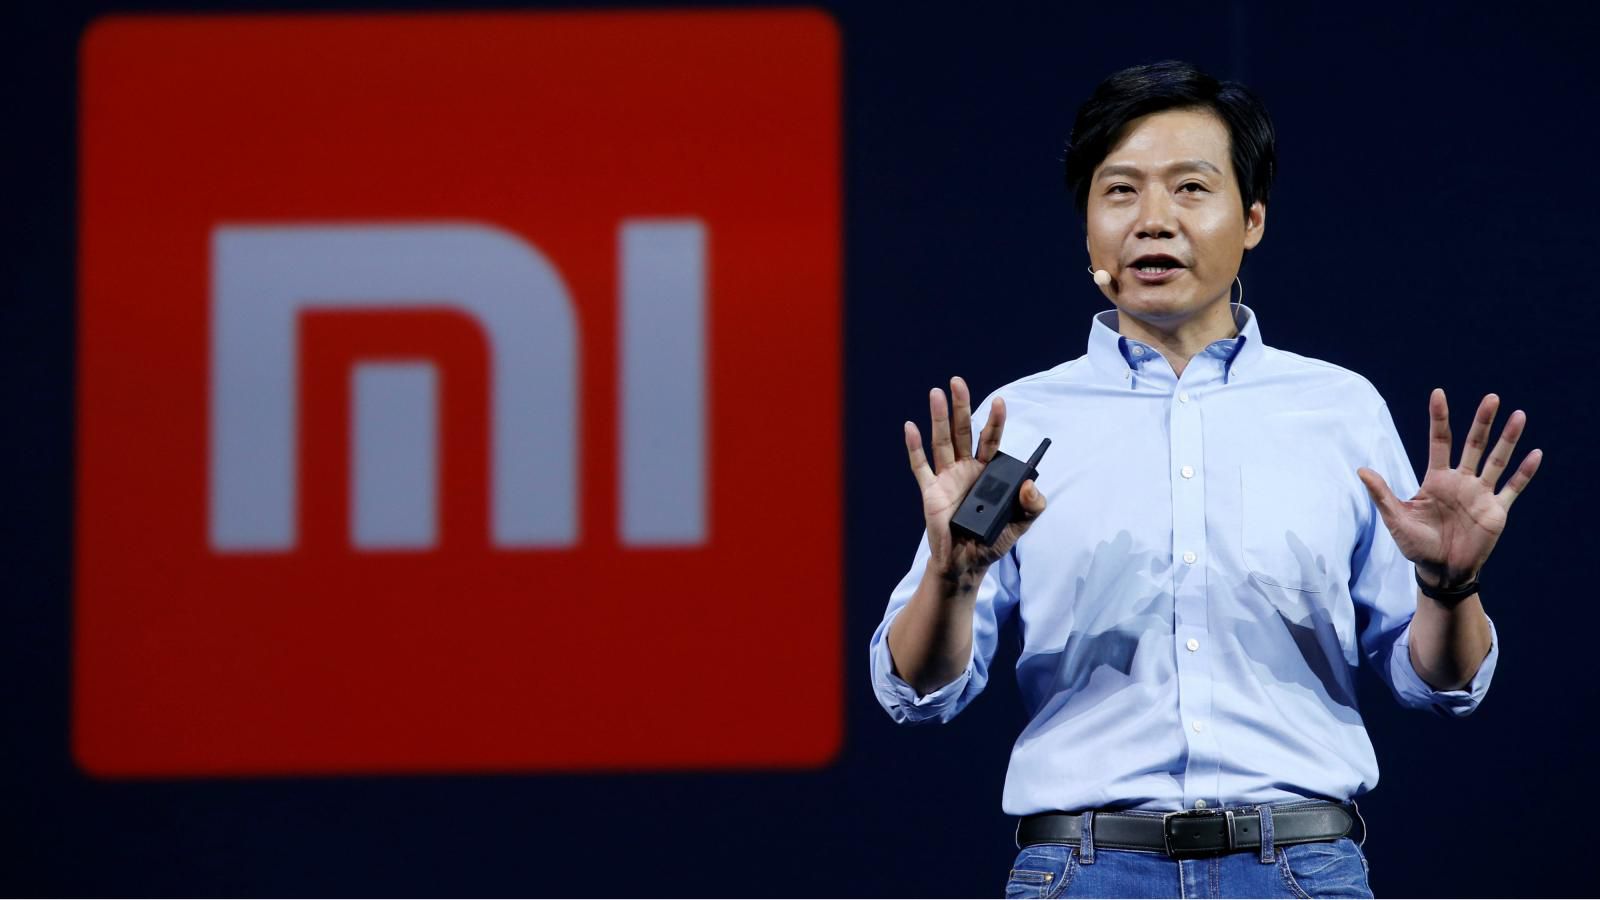 Xiaomi founder and chief executive Lei Jun